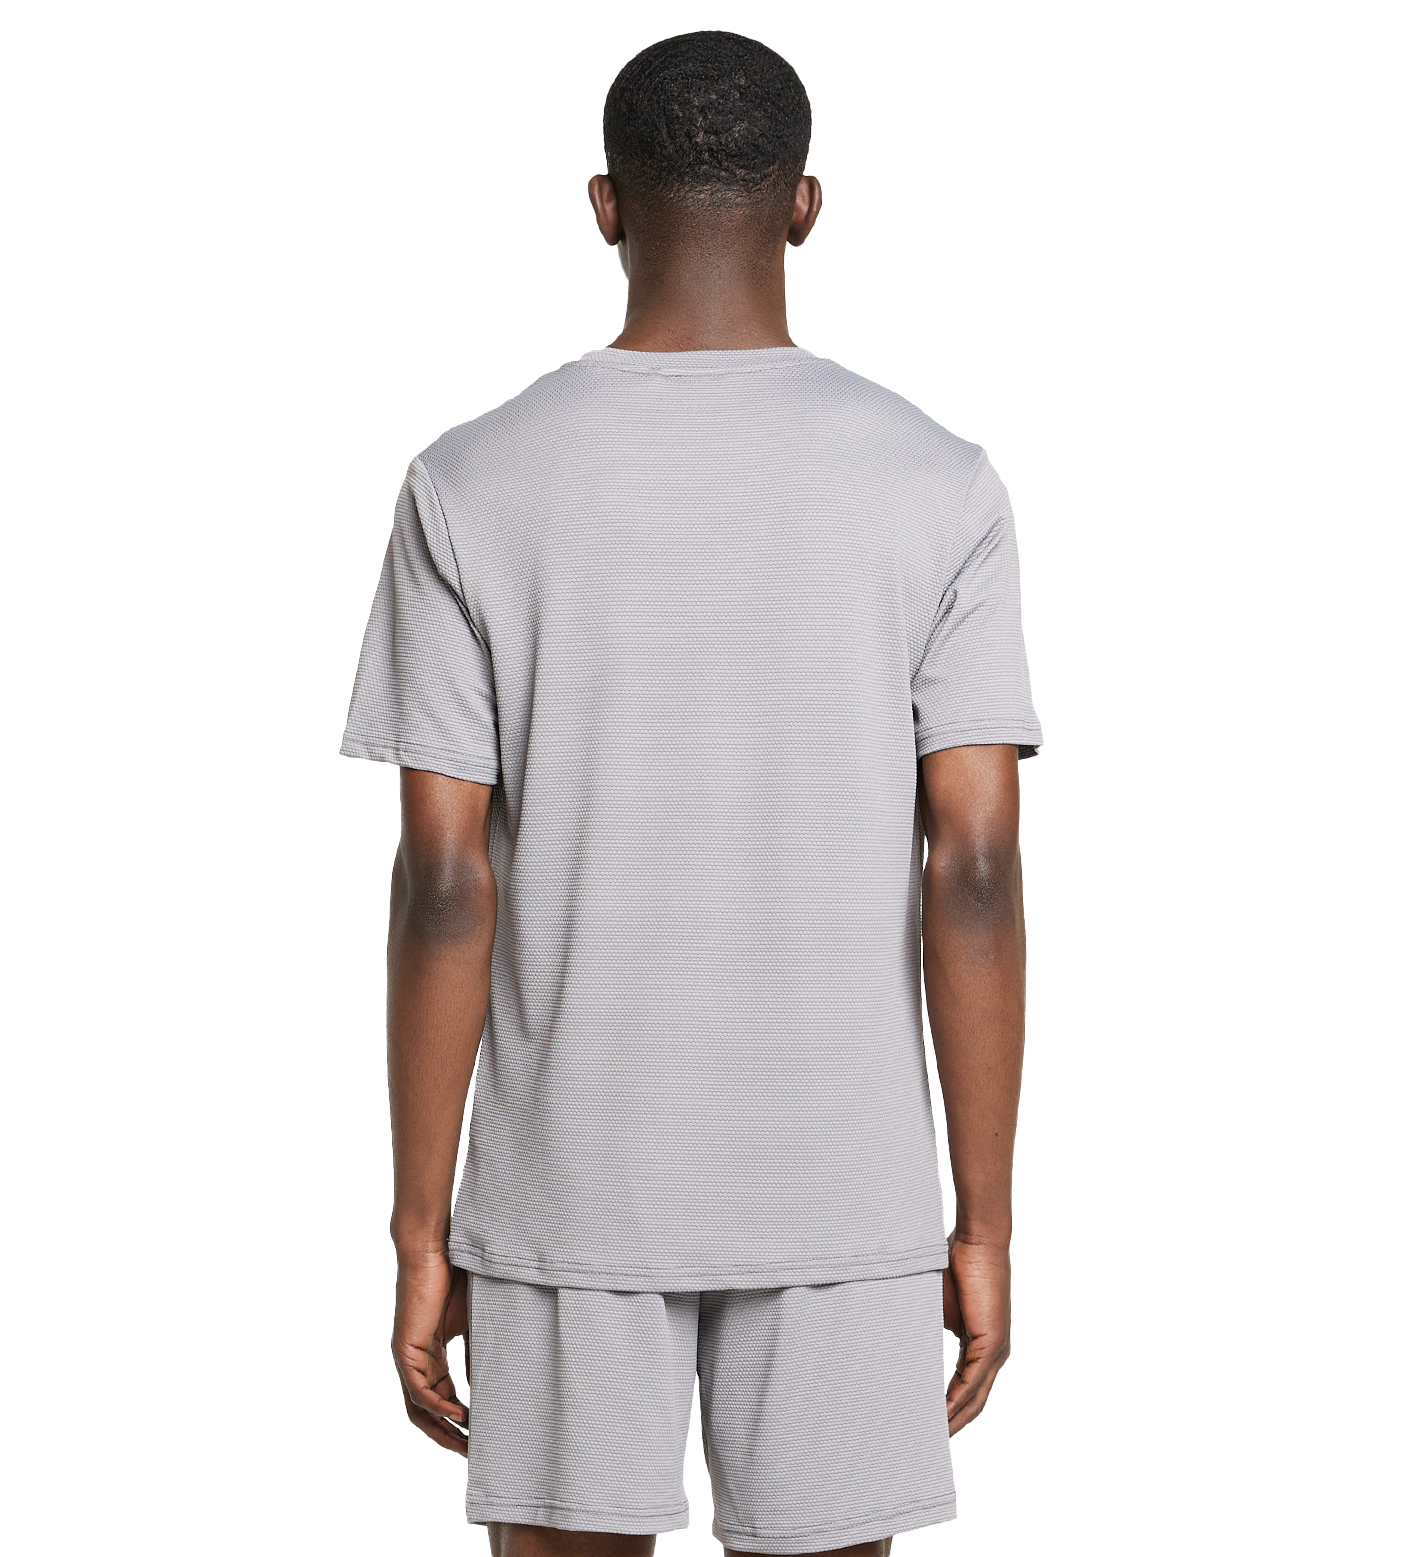 Nike Yoga Dri-FIT graphic logo t-shirt in light stone